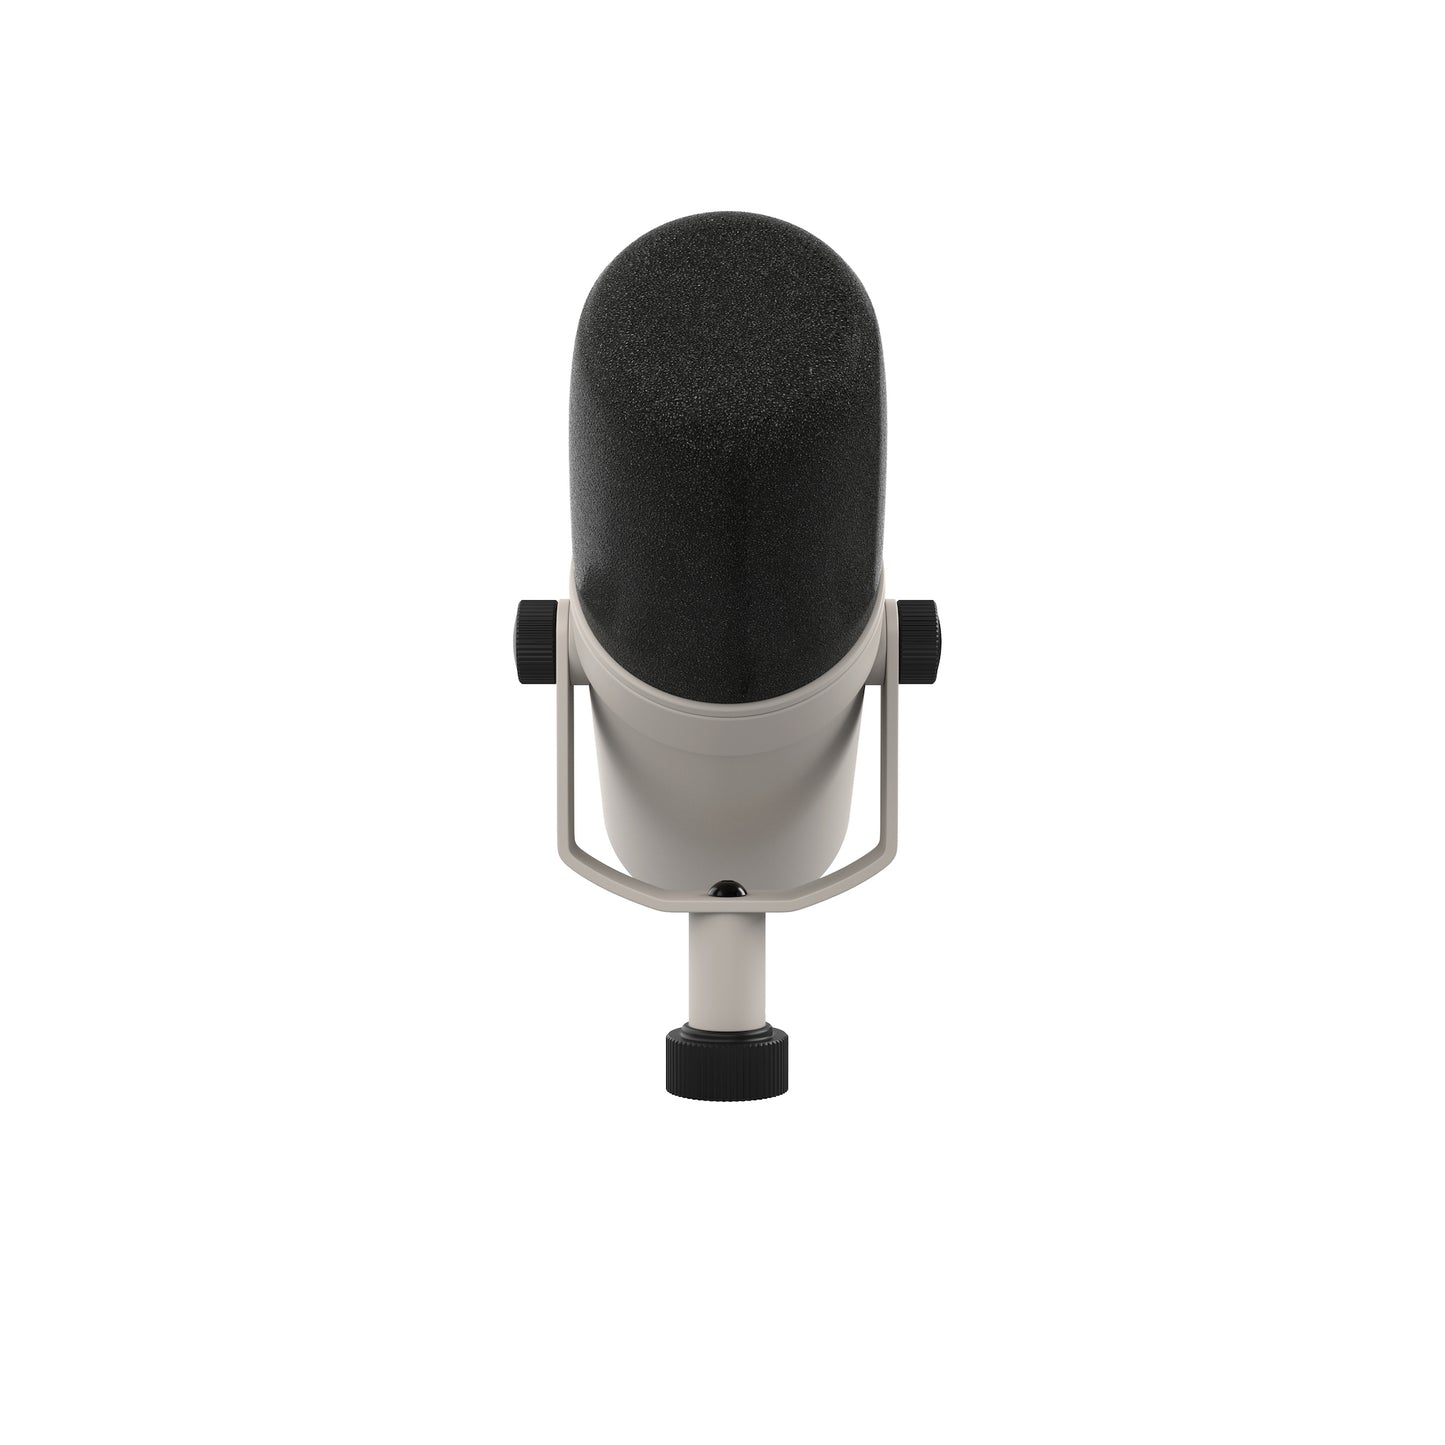 Universal Audio SD-1 Standard Dynamic Microphone w/ Hemisphere